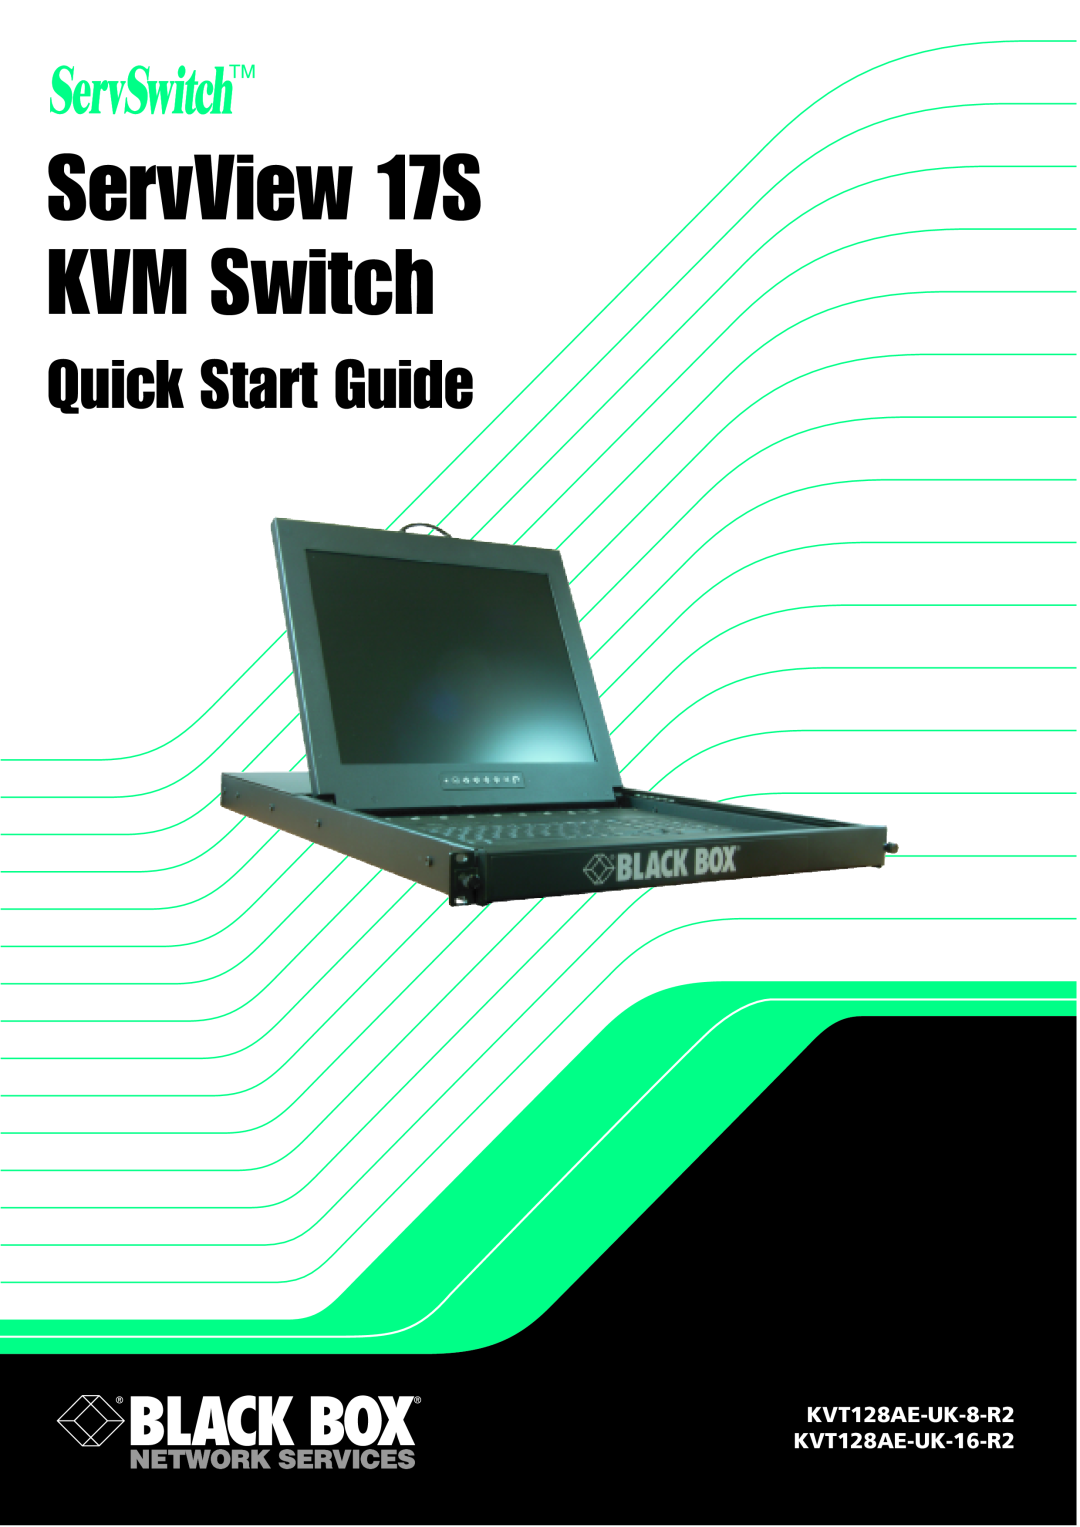 Black Box KVT128AE-UK-8-R2, KVT128AE-UK-16-R2 quick start ServView 17S KVM Switch, Quick Start Guide 